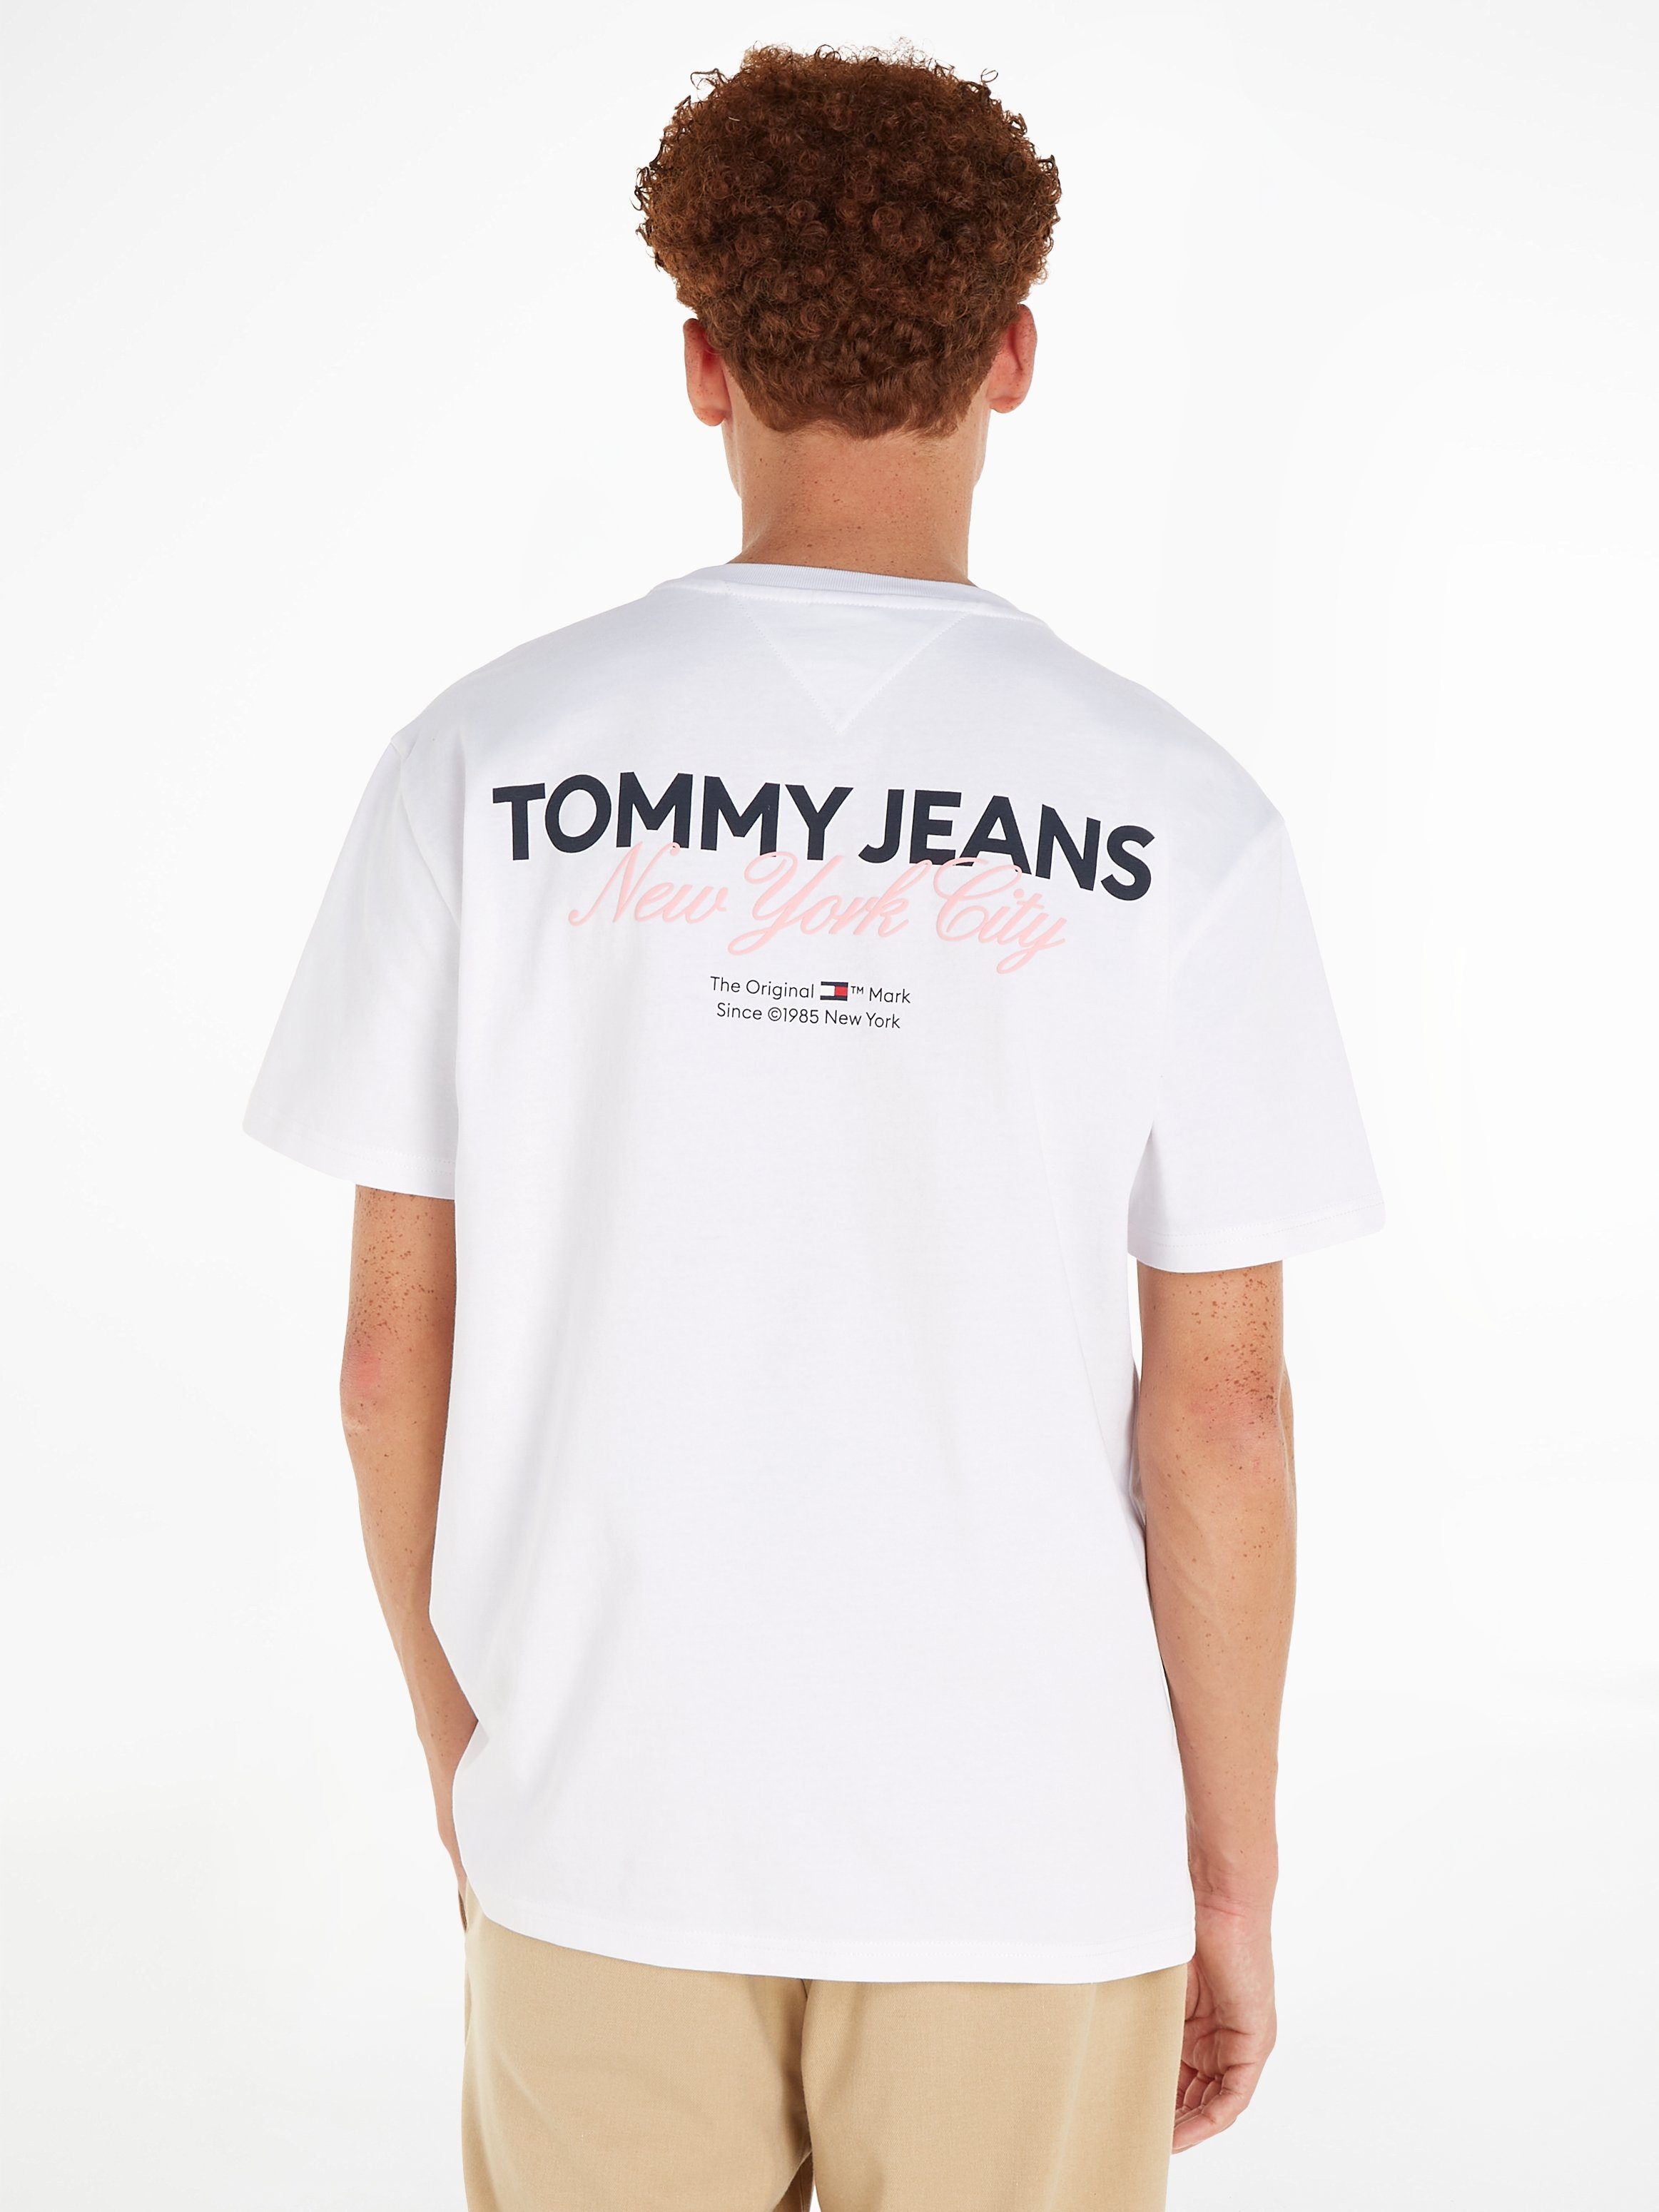 White TJ POP NYC COLOR TJM REG Jeans T-Shirt TEE Tommy